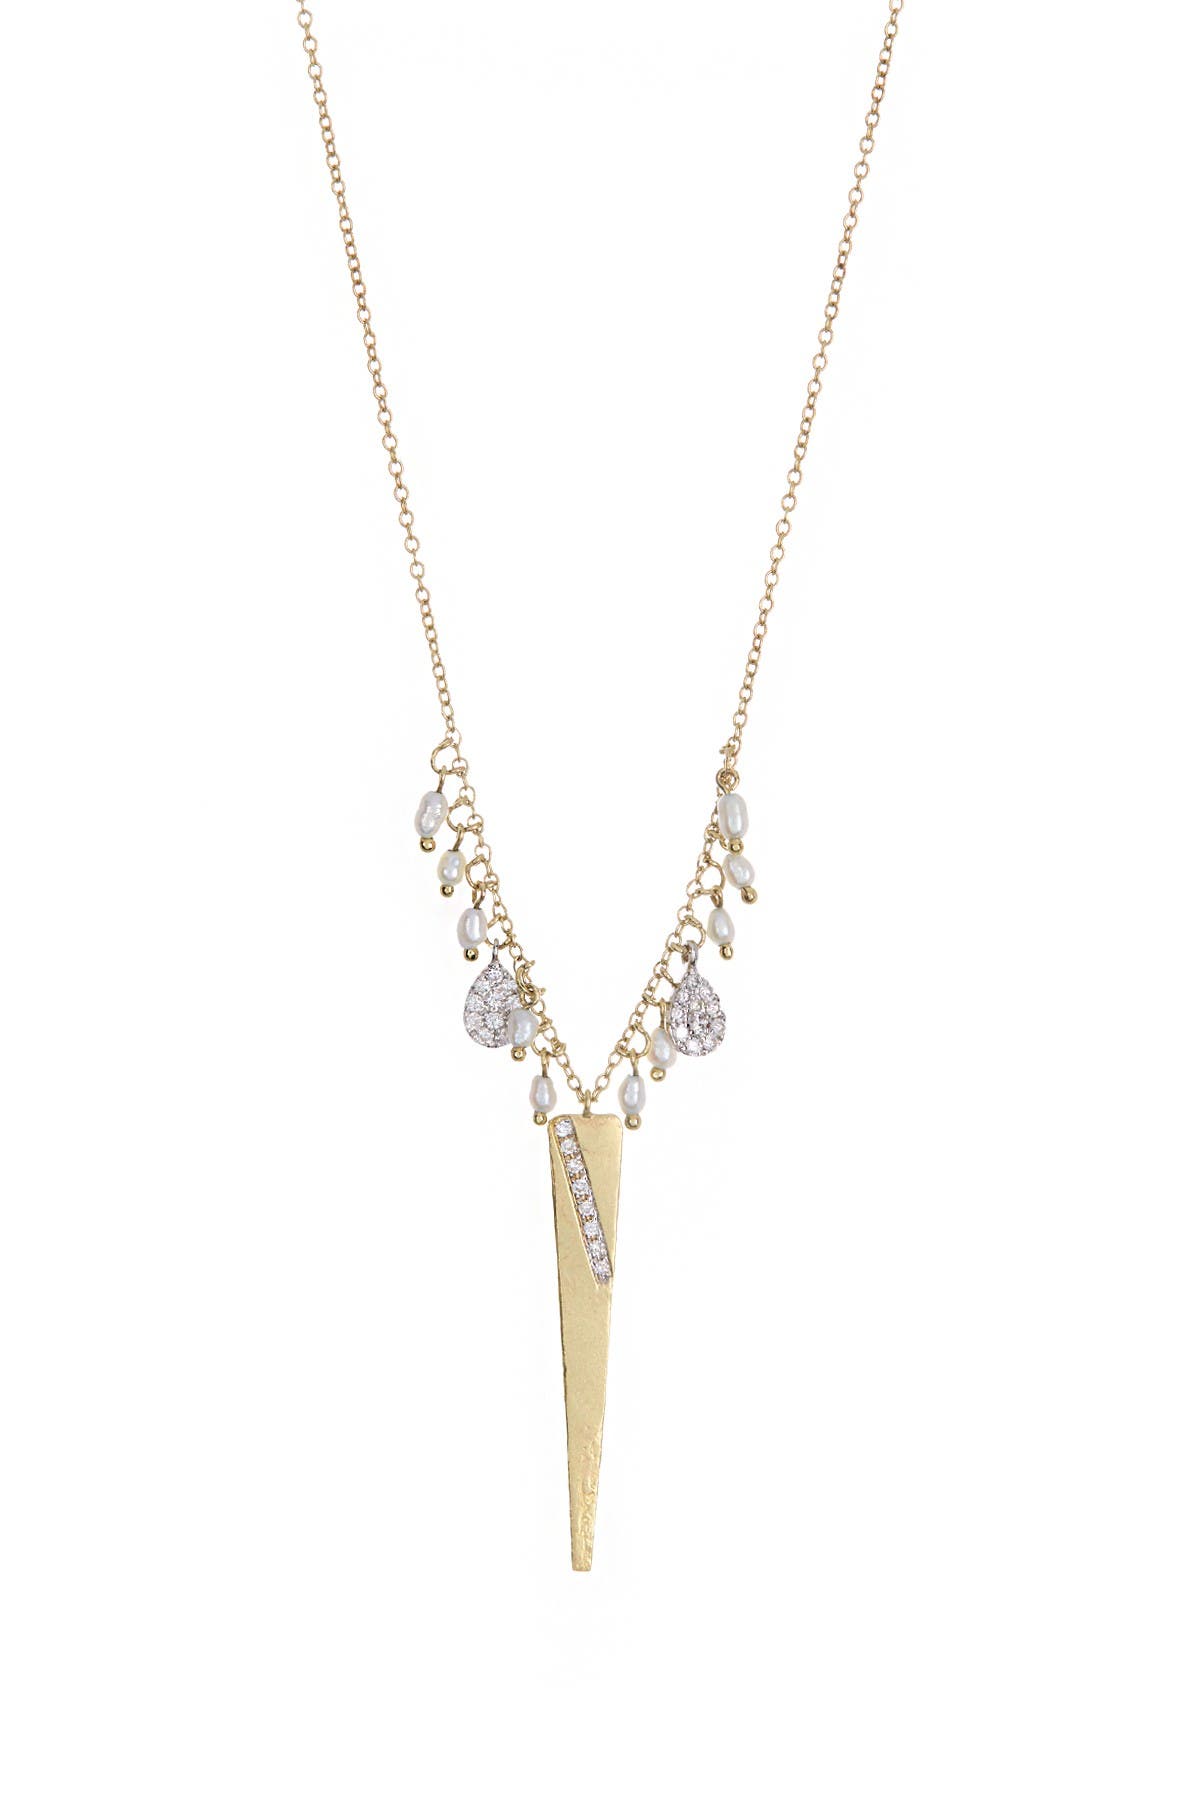 Meira T 14k Yellow Gold Pave Diamond Fringe Dagger Pendant Necklace